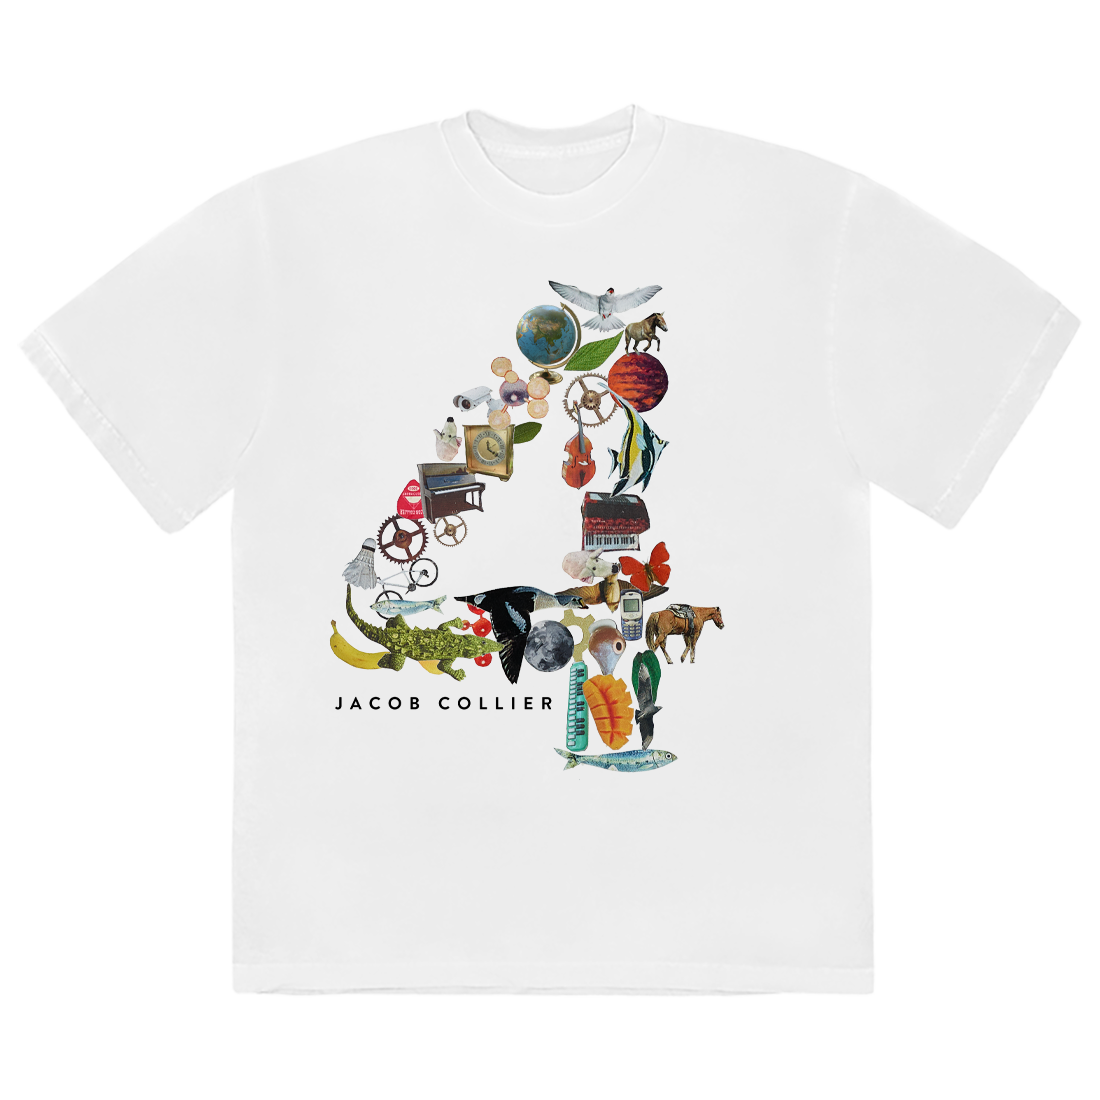 Jacob Collier - 'I Sang On Djesse Vol.4' T-Shirt (White)